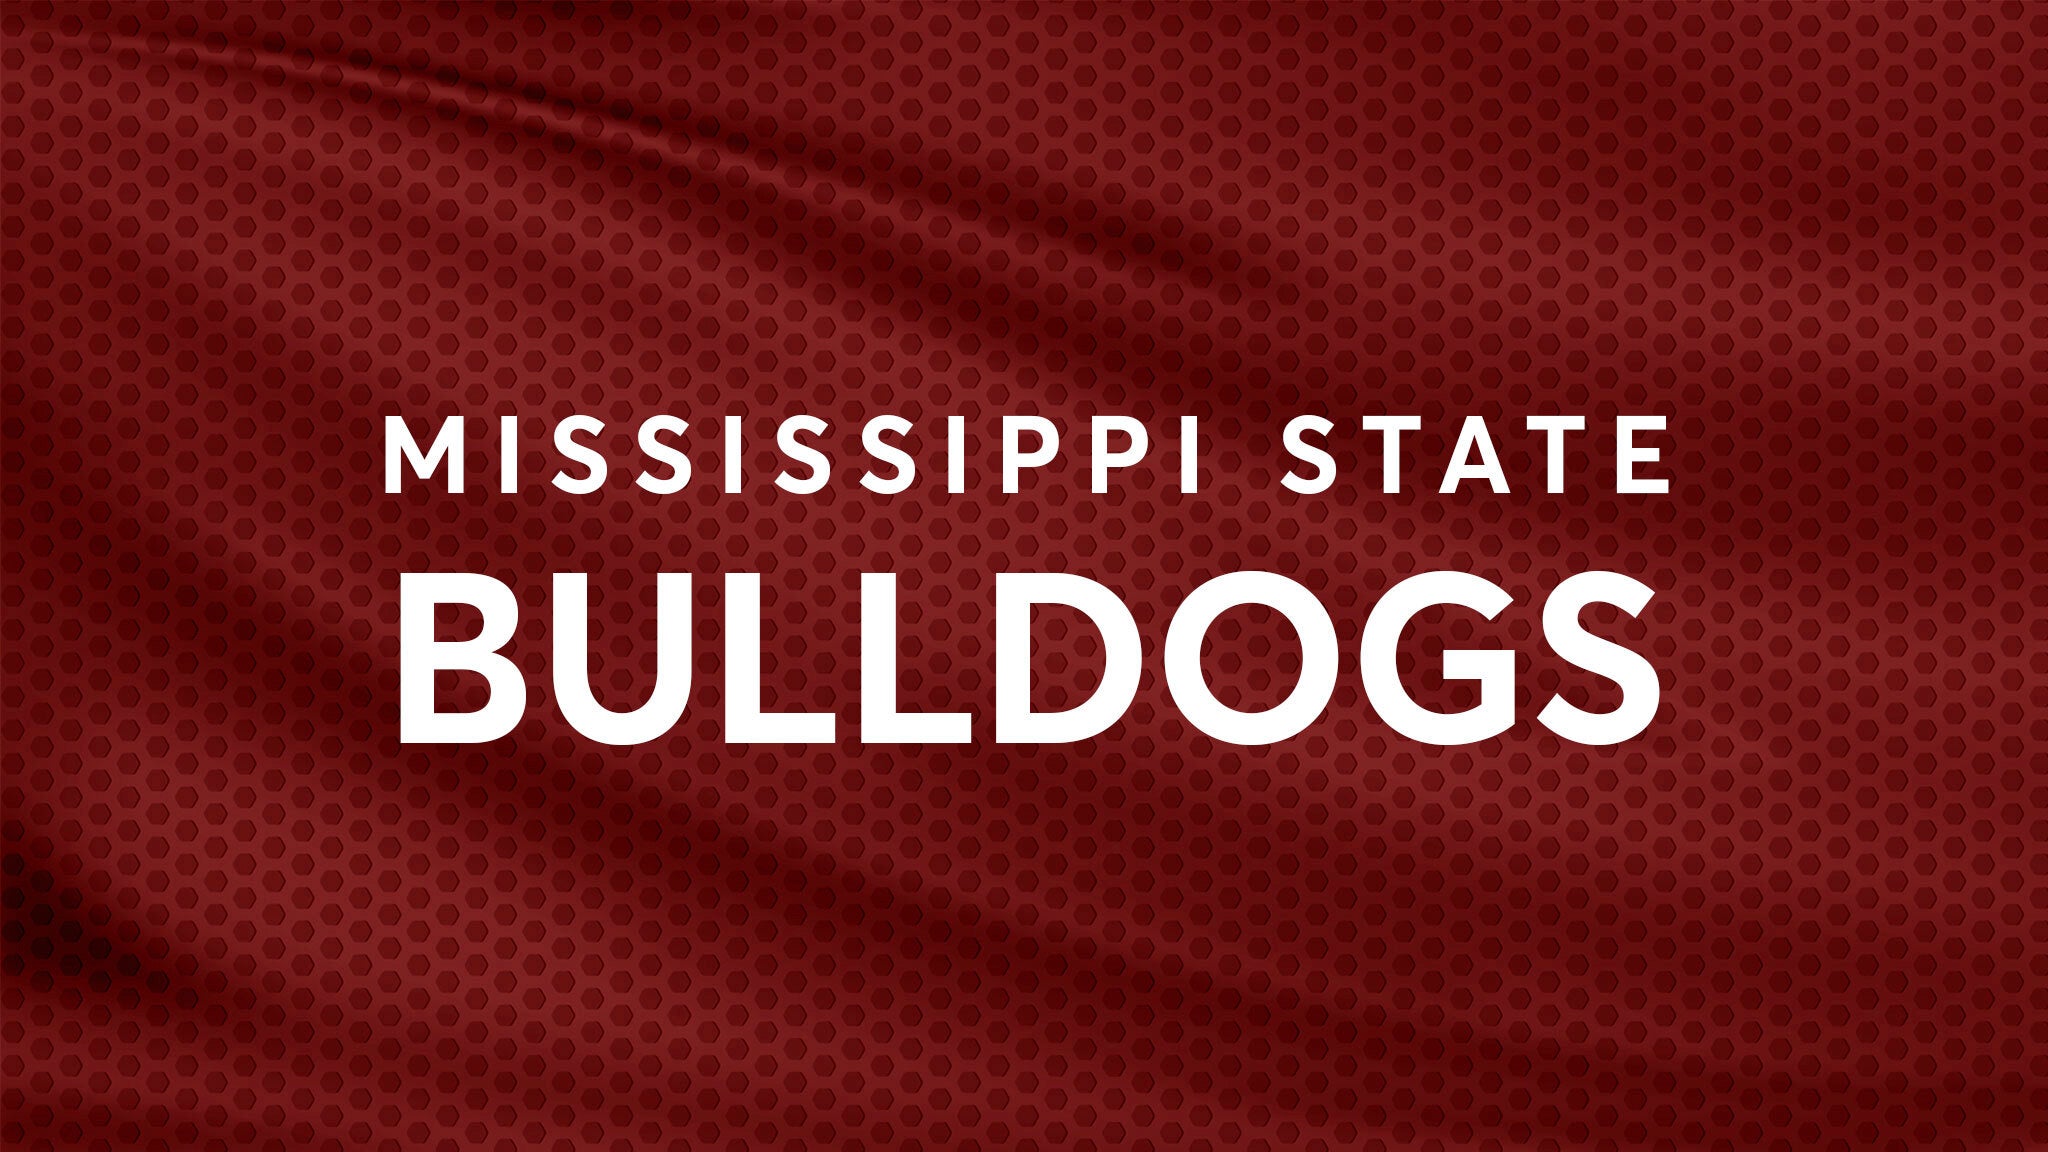 Mississippi State Bulldogs Football vs. Arkansas Razorbacks Football hero